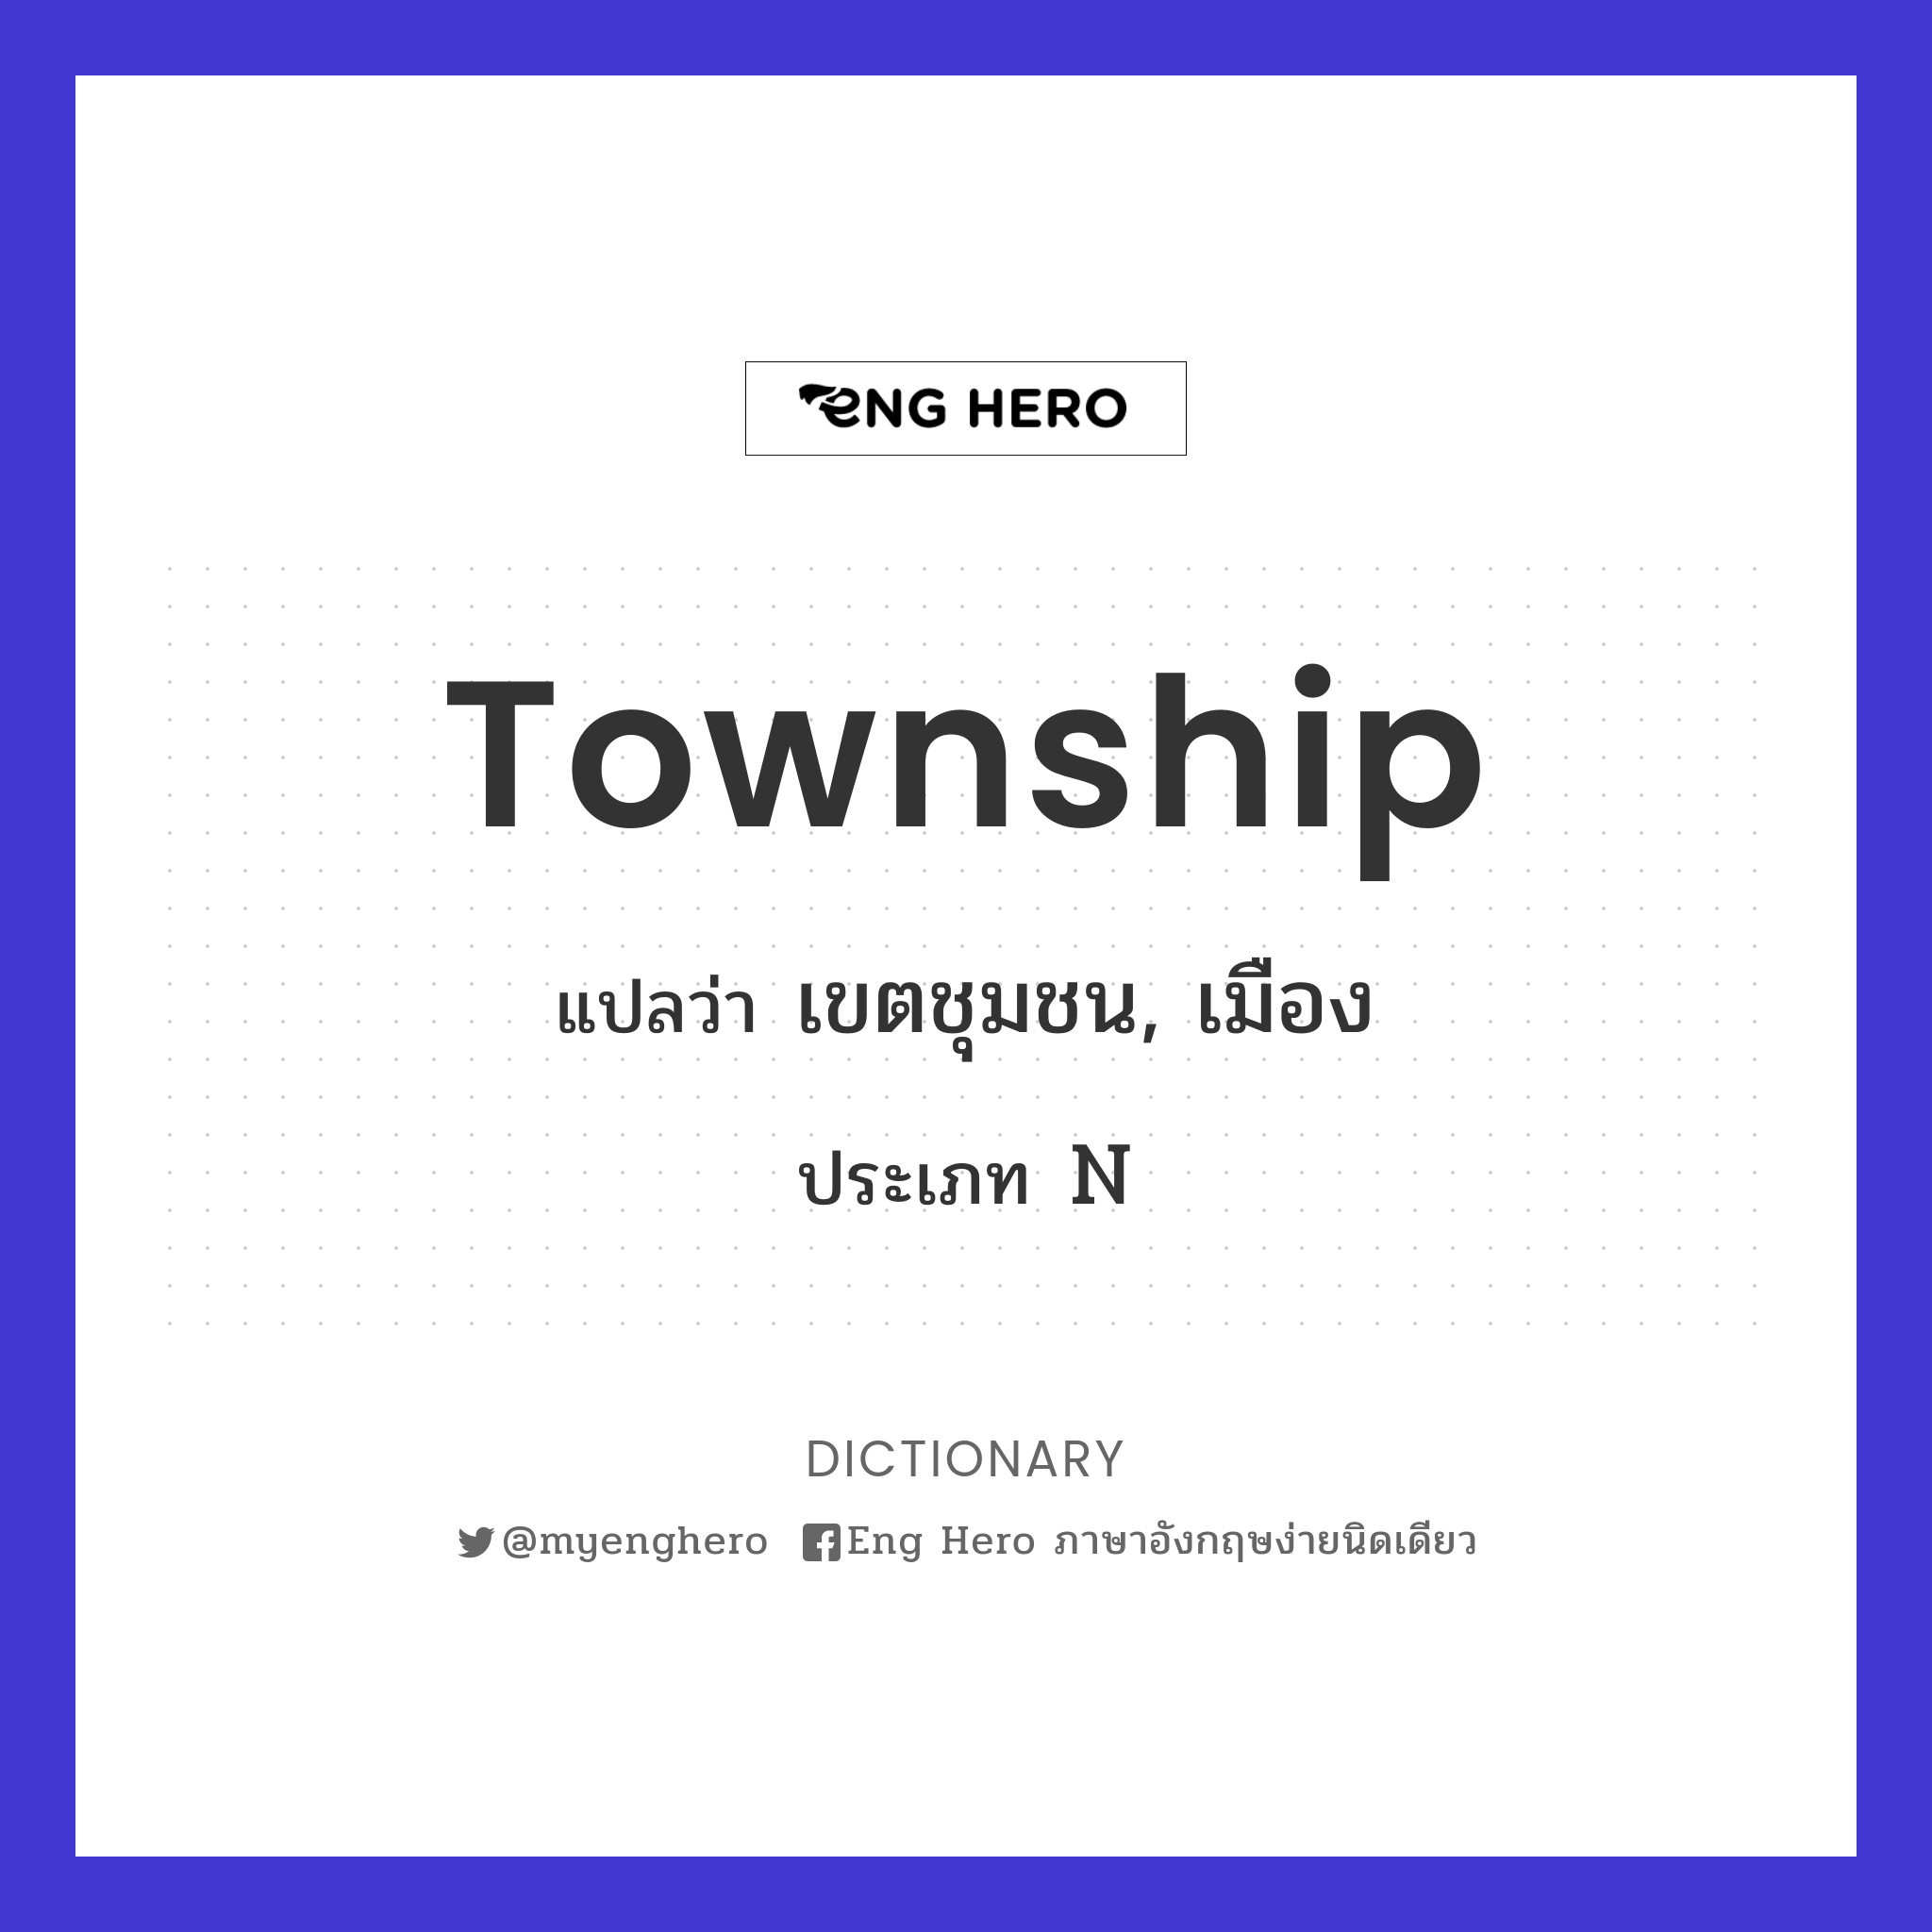 township